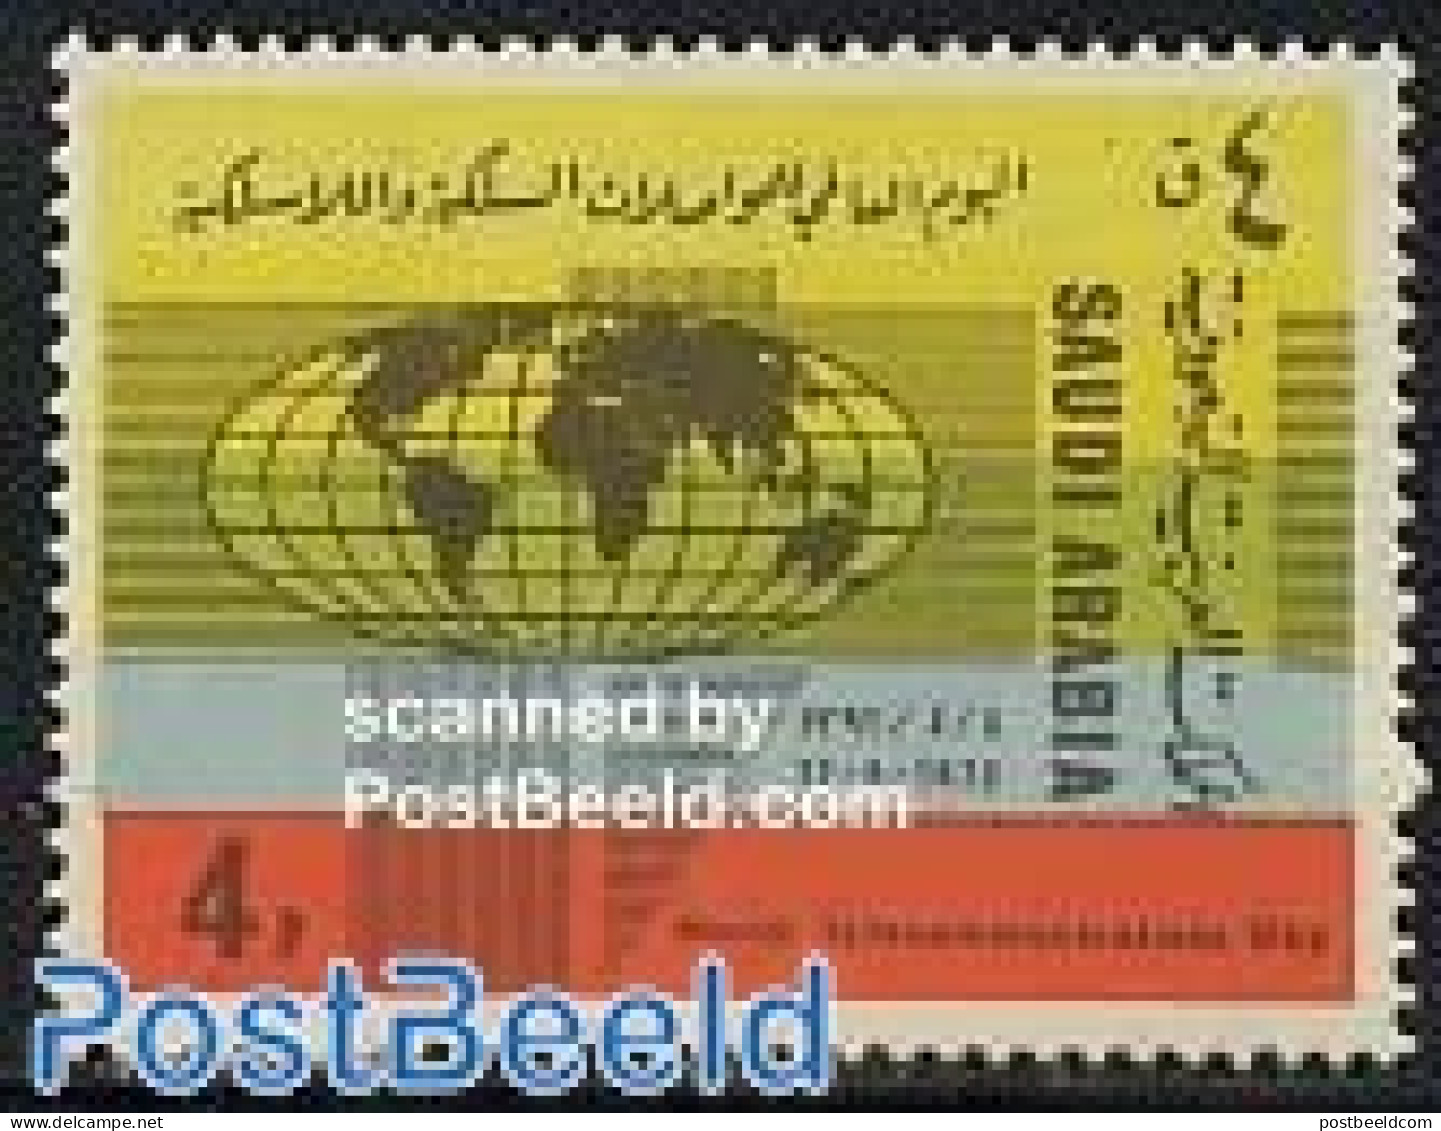 Saudi Arabia 1972 World Telecommunication Day 1v, Mint NH, Science - Various - Telecommunication - Maps - Telecom